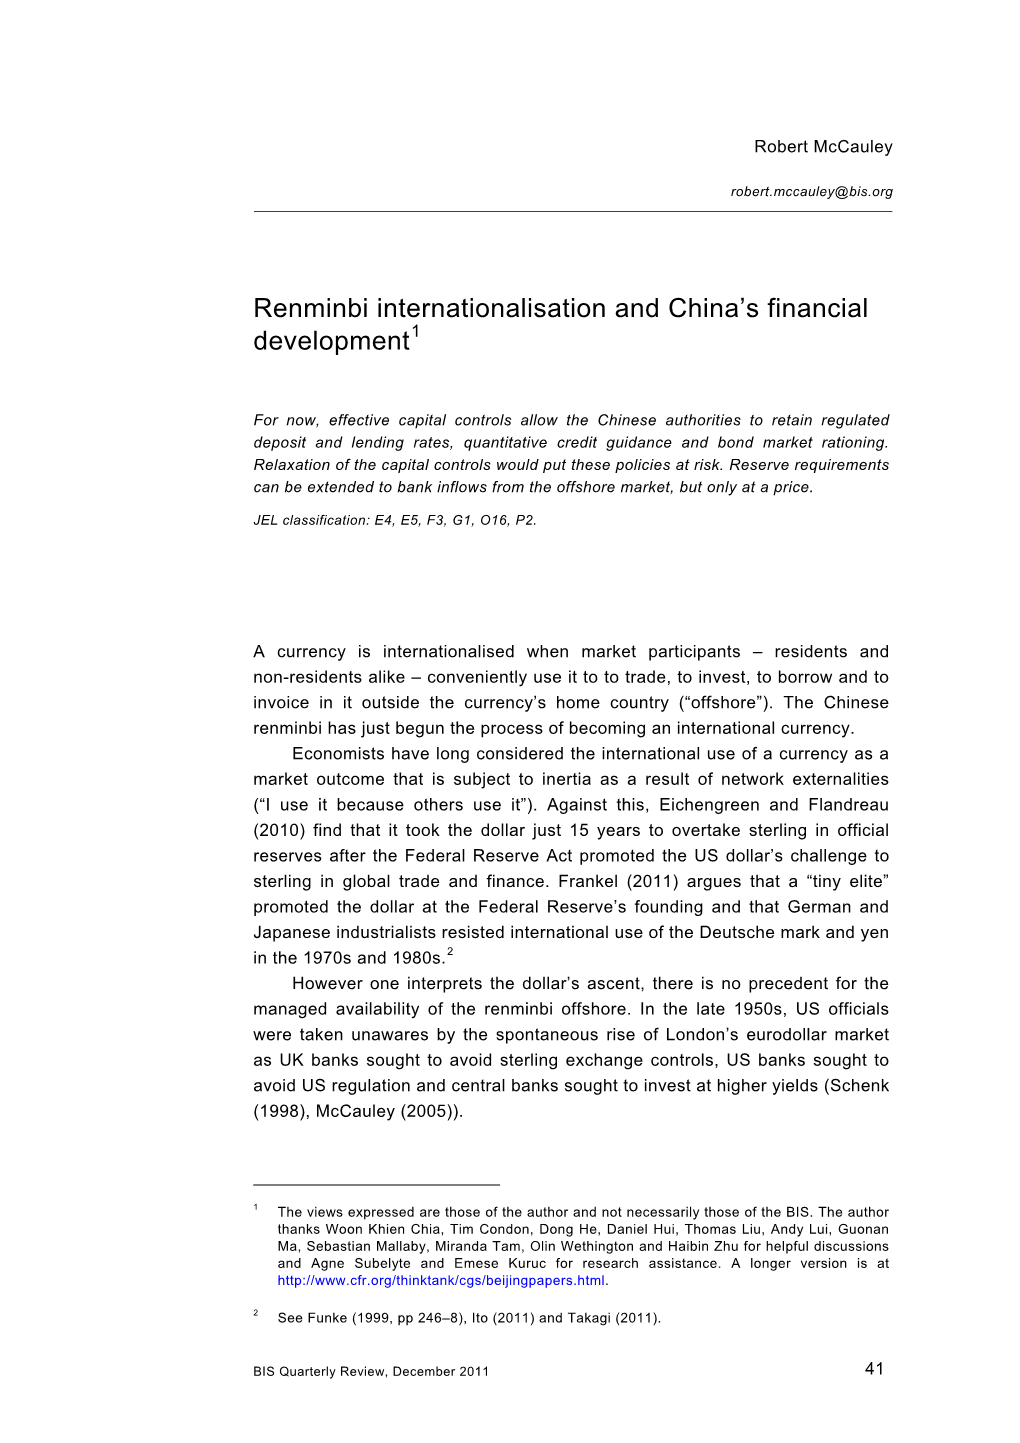 Renminbi Internationalisation and China's Financial Development